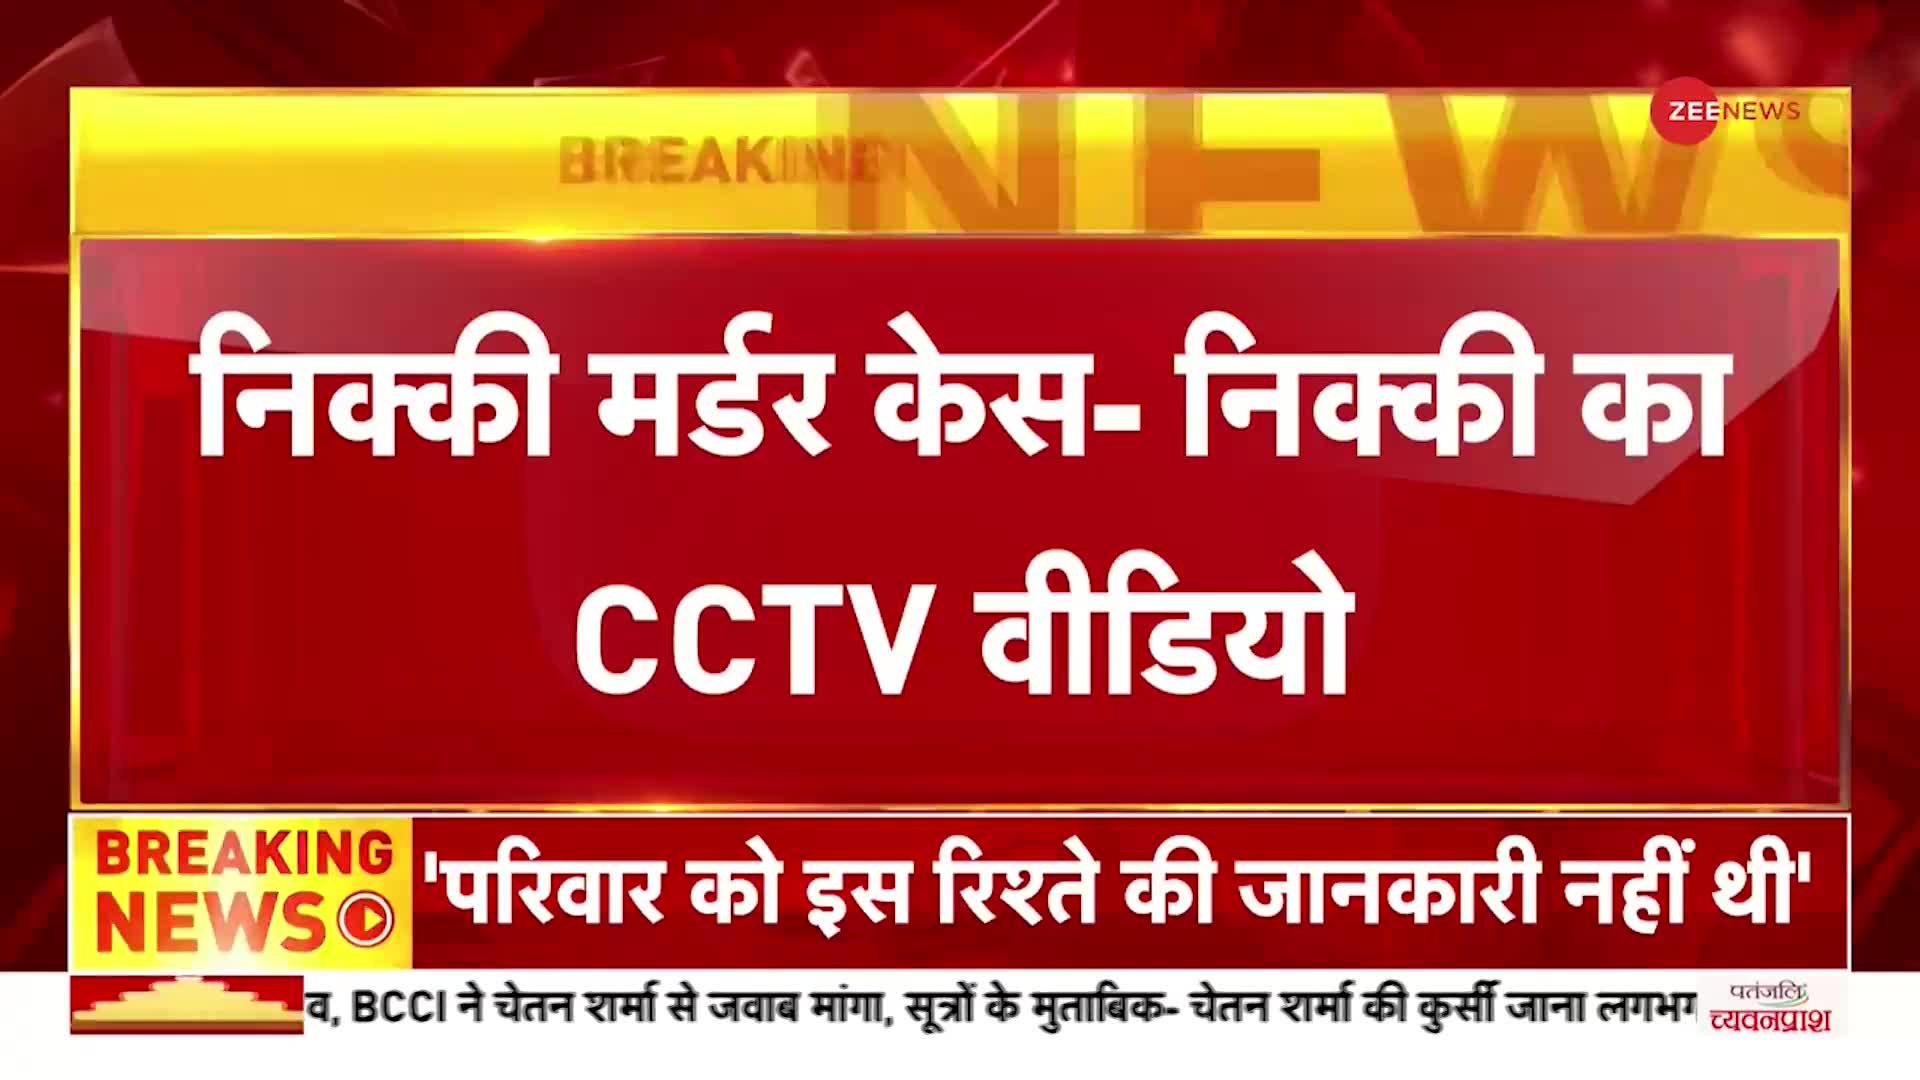 Nikki Yadav Murder Case Update: मर्डर वाले दिन का CCTV वीडियो आया सामने